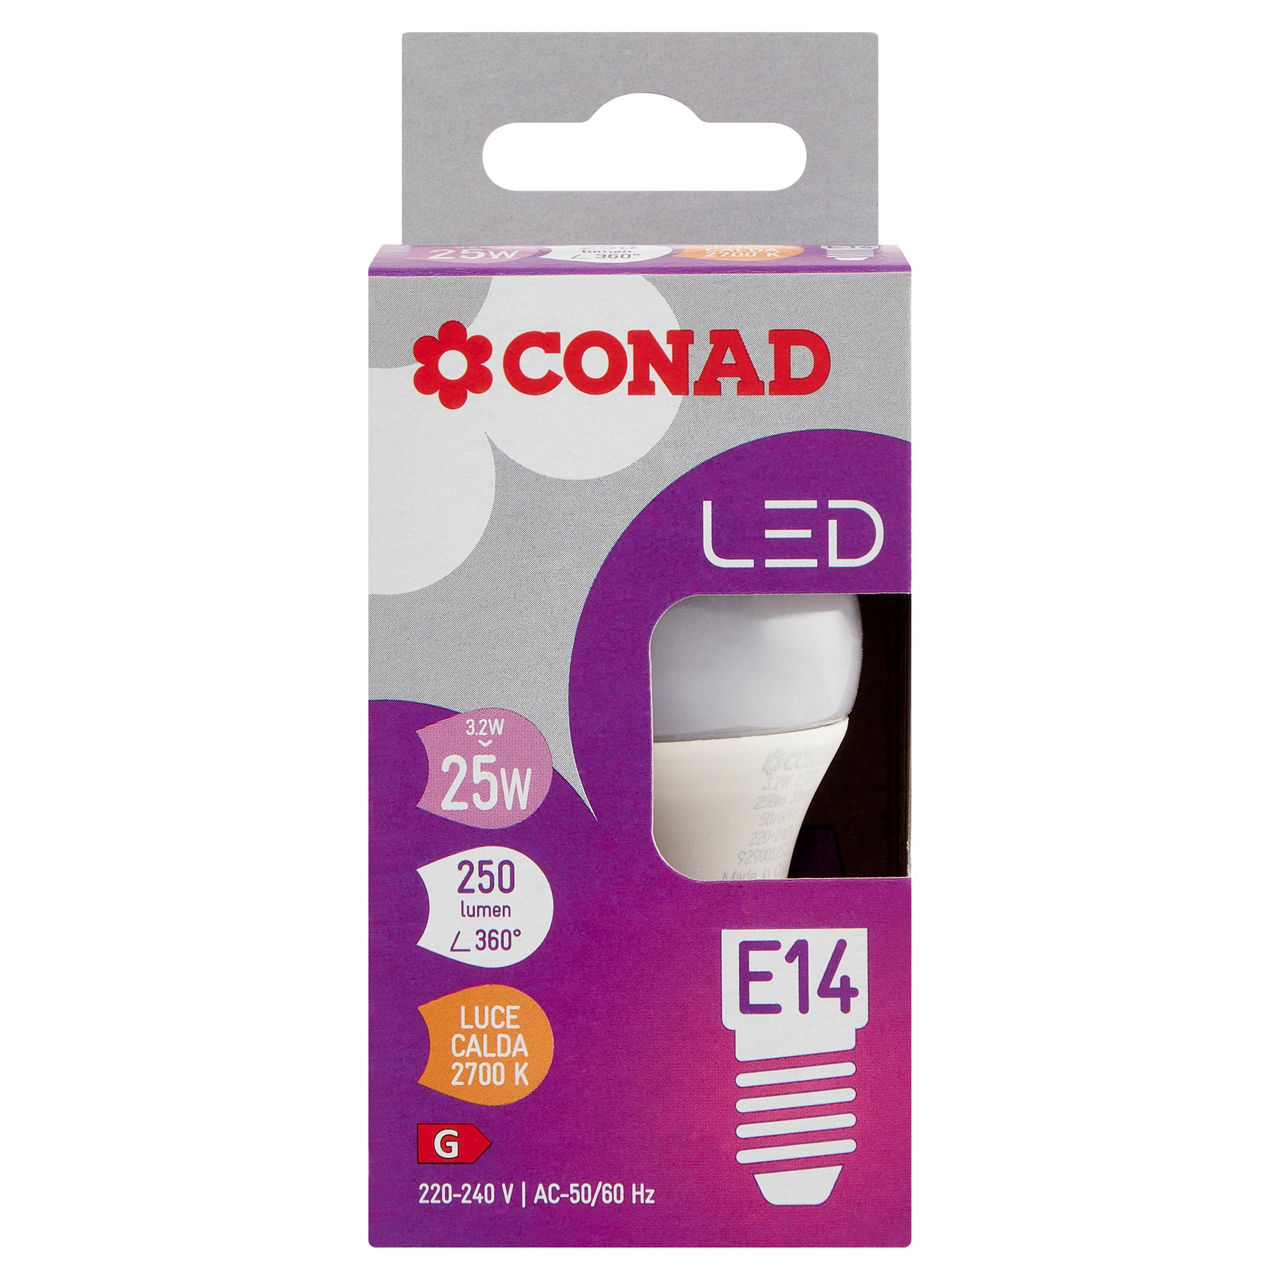 CONAD Led 3.2W 250 Lumen E14 Luce Calda